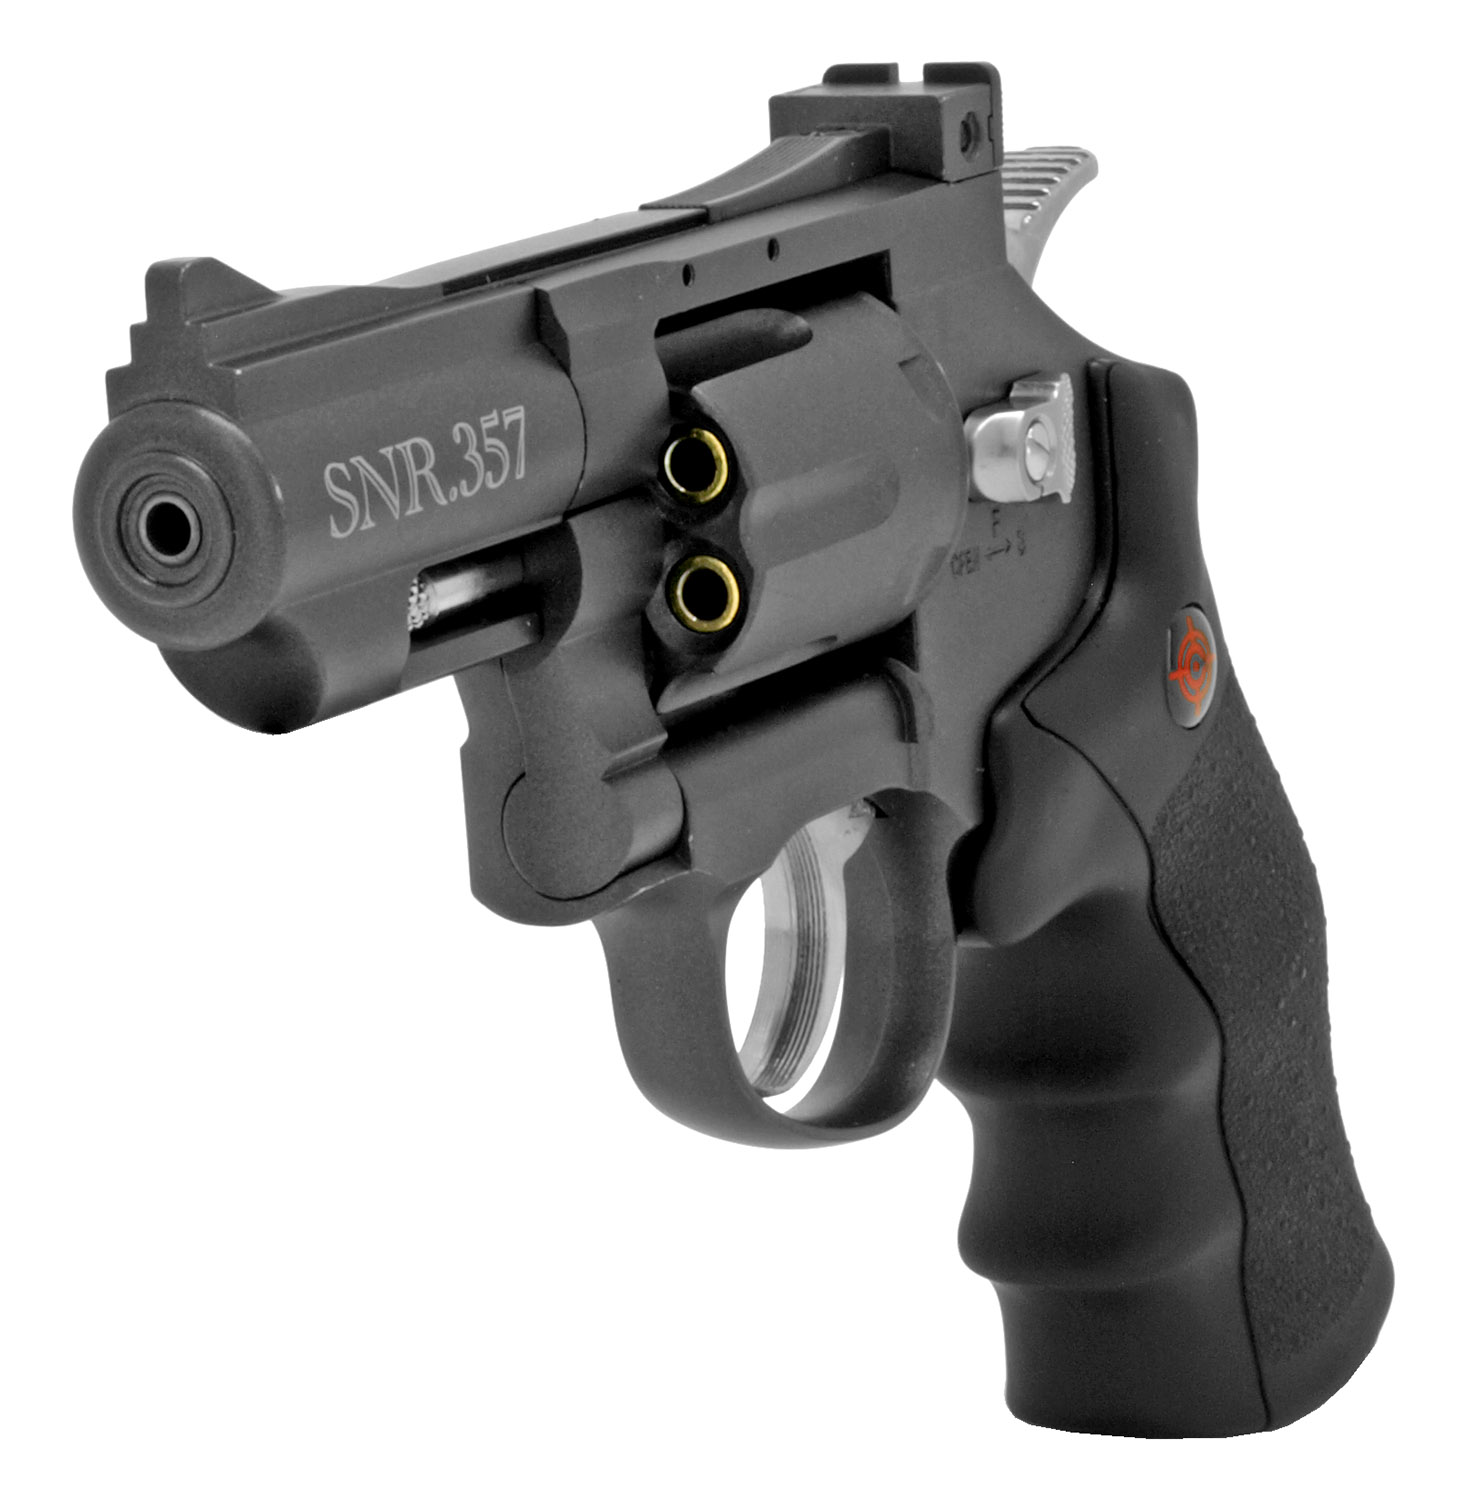 Crosman Snr357 Dual Ammo Snub Nose Revolver Remanufactured 